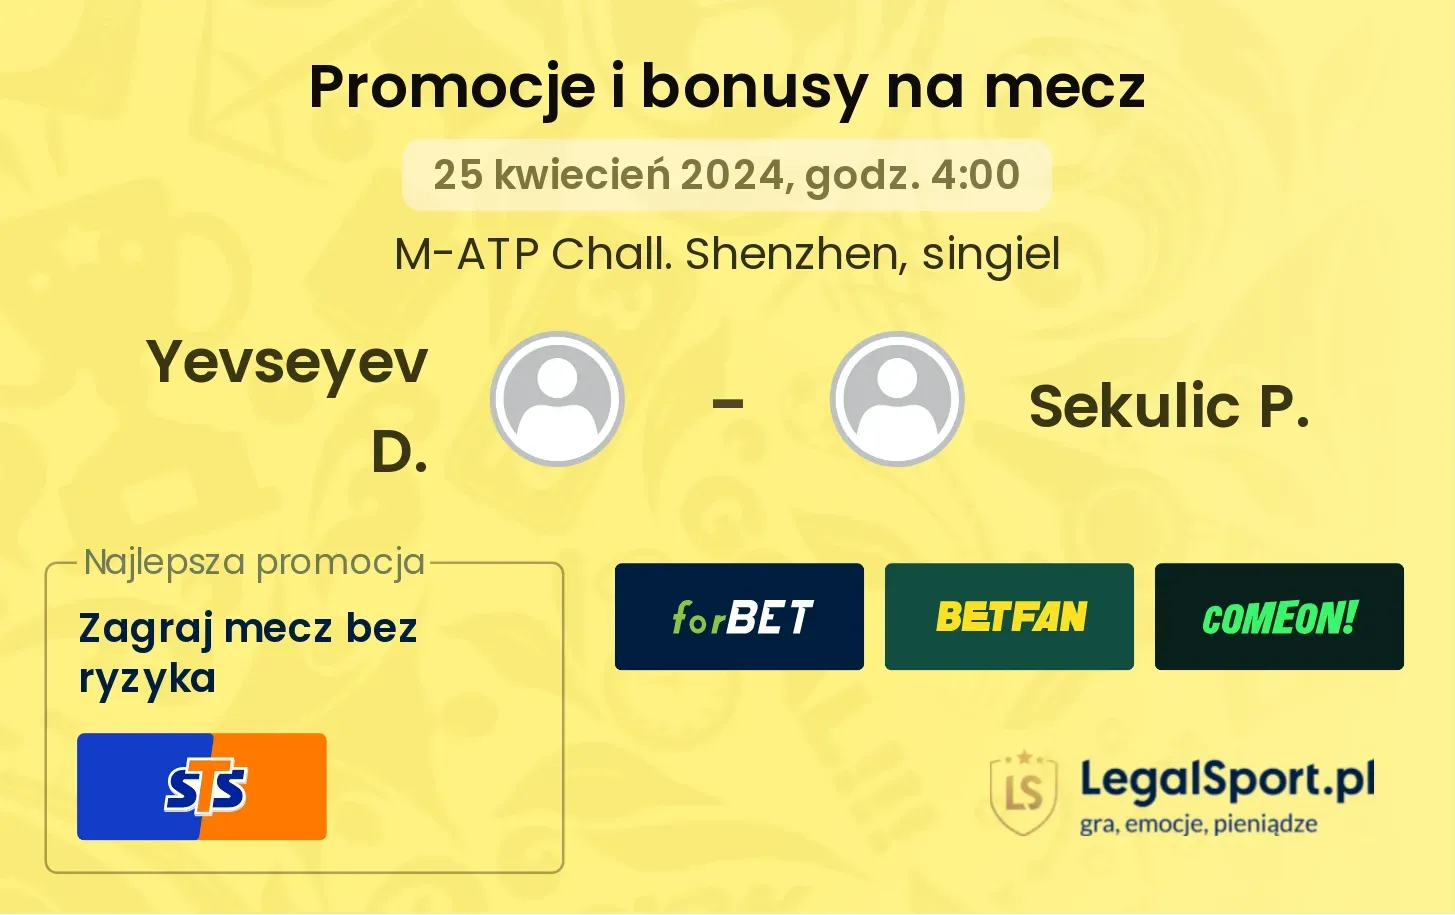 Yevseyev D. - Sekulic P. promocje bonusy na mecz